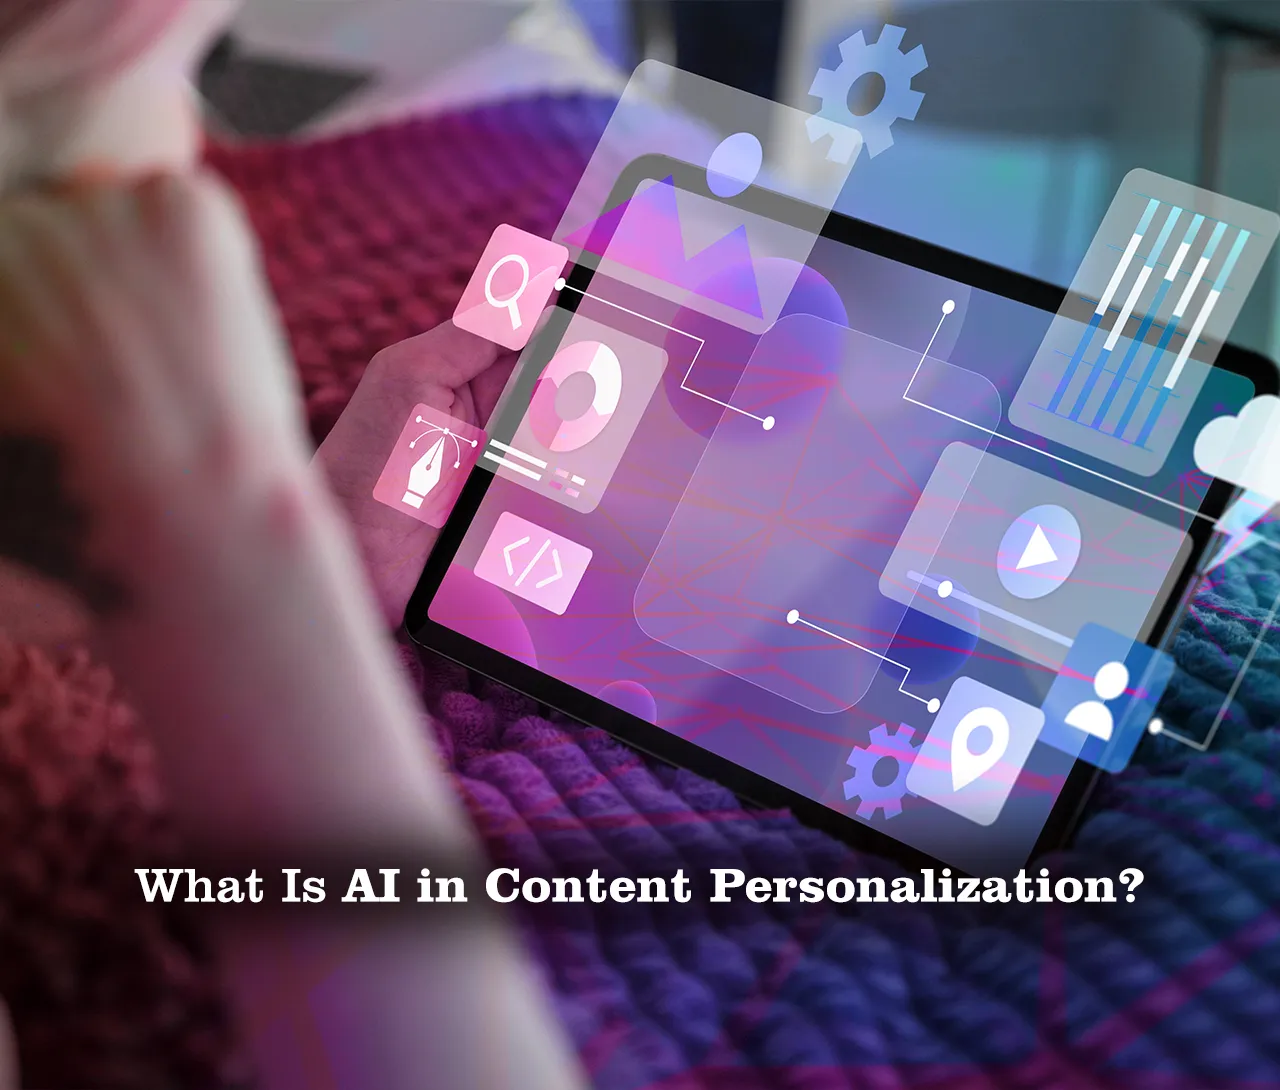 AI in Content Personalization